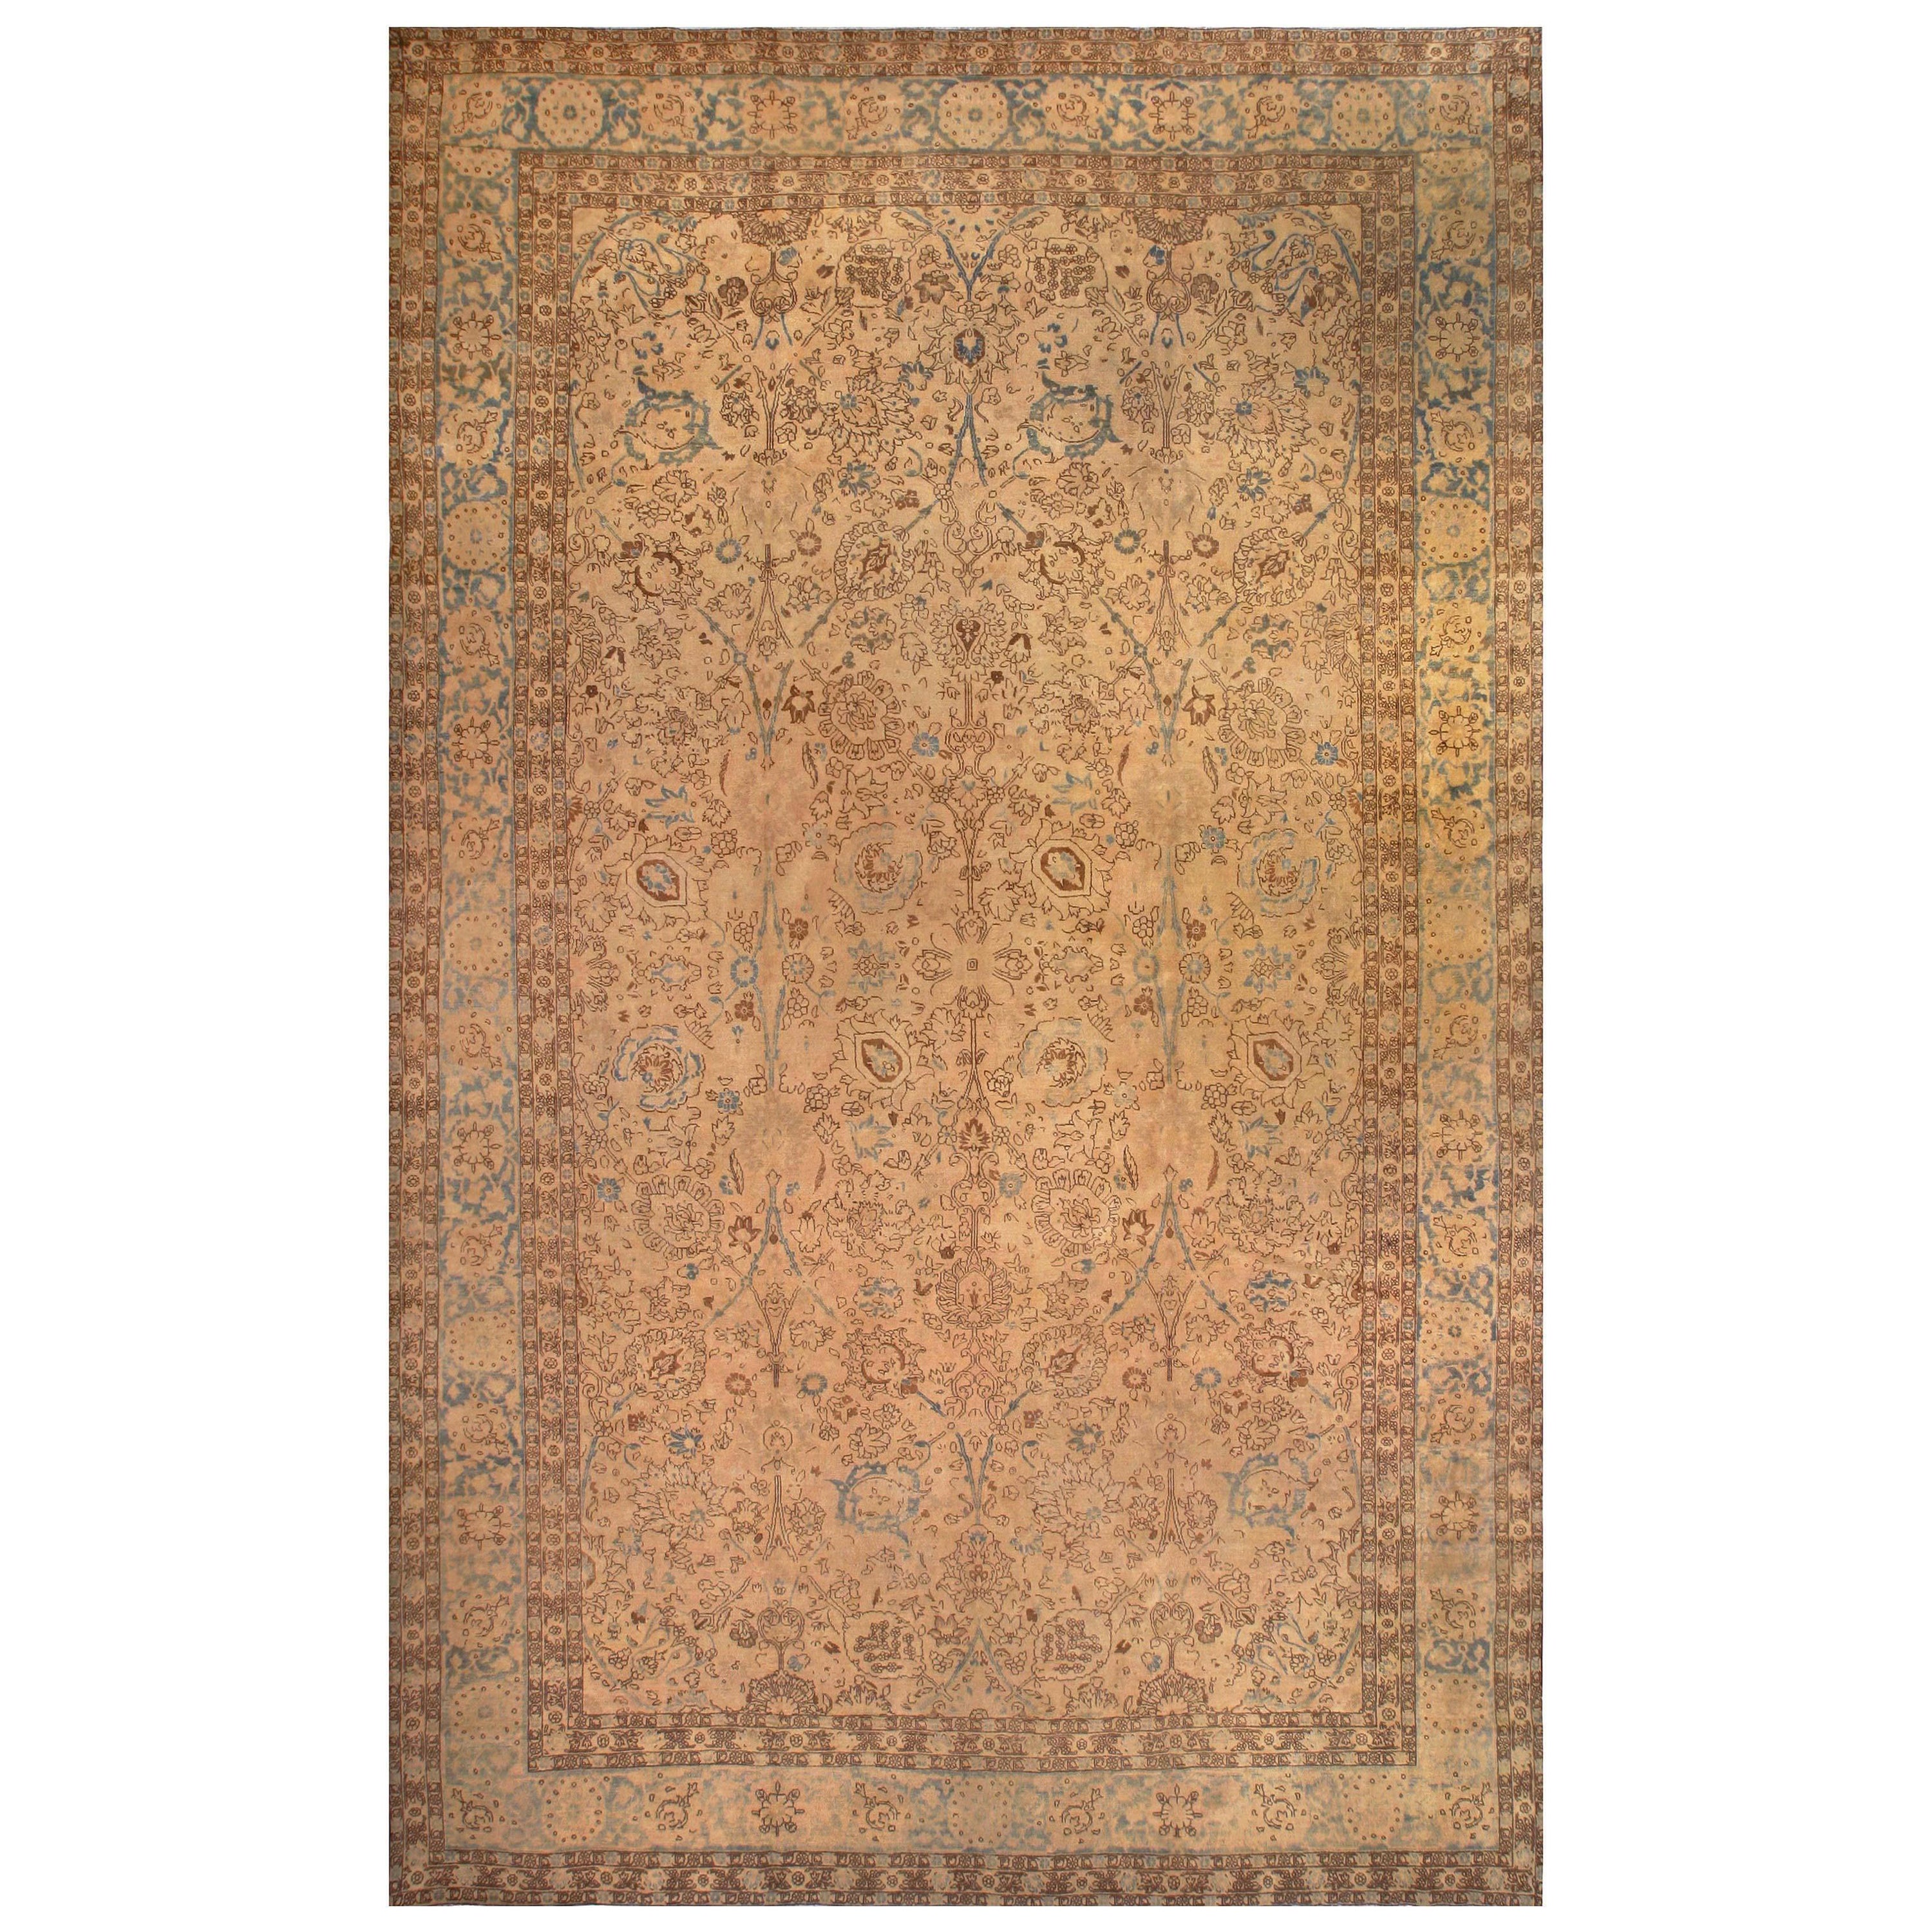 Early 20th Century Tabriz Botanic Handmade Wool Rug